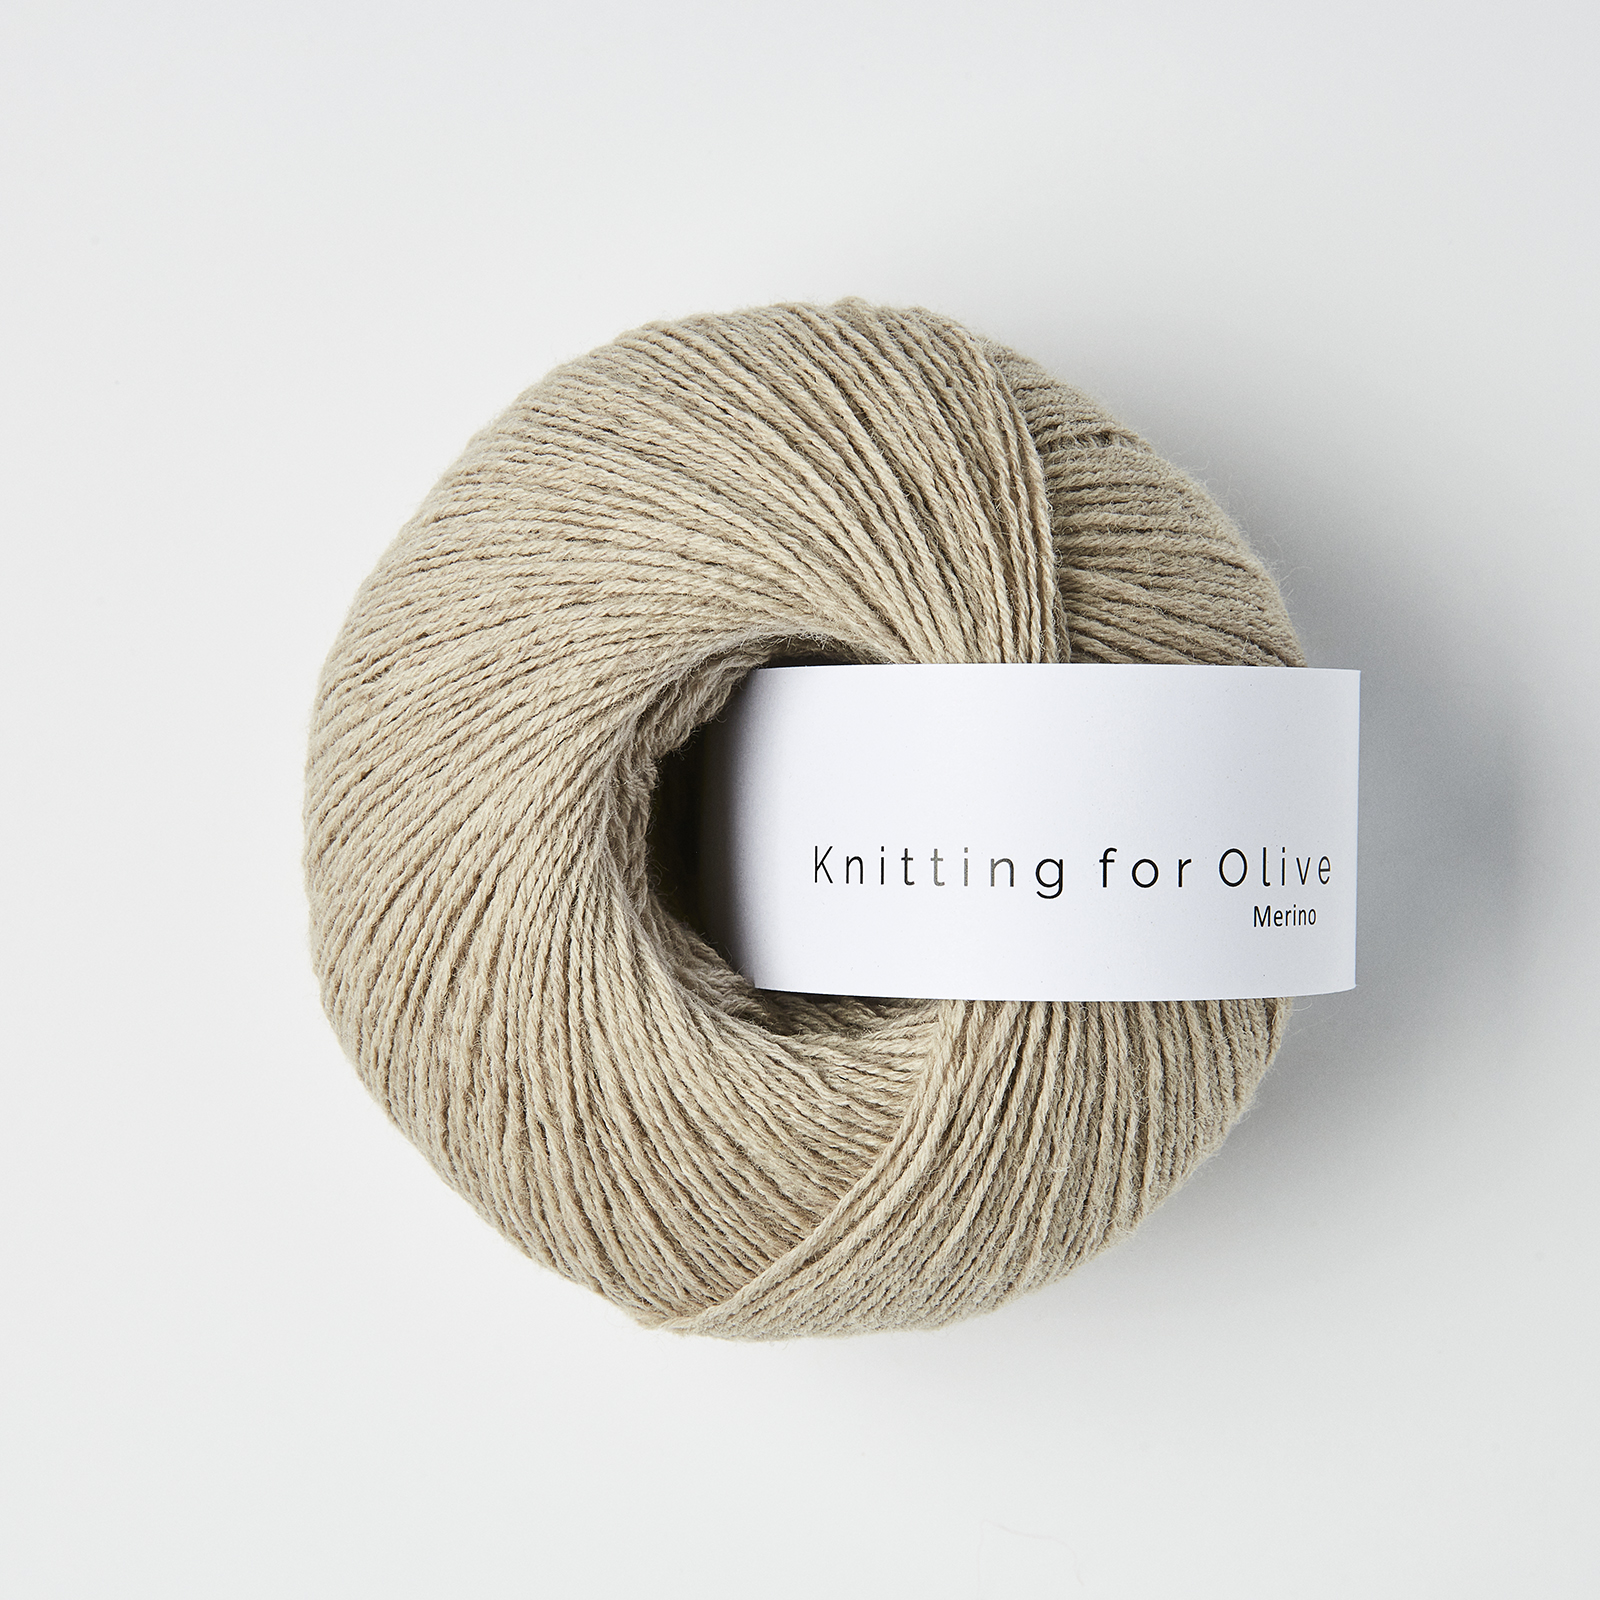 Merino (Knitting for Olive): nordic beach